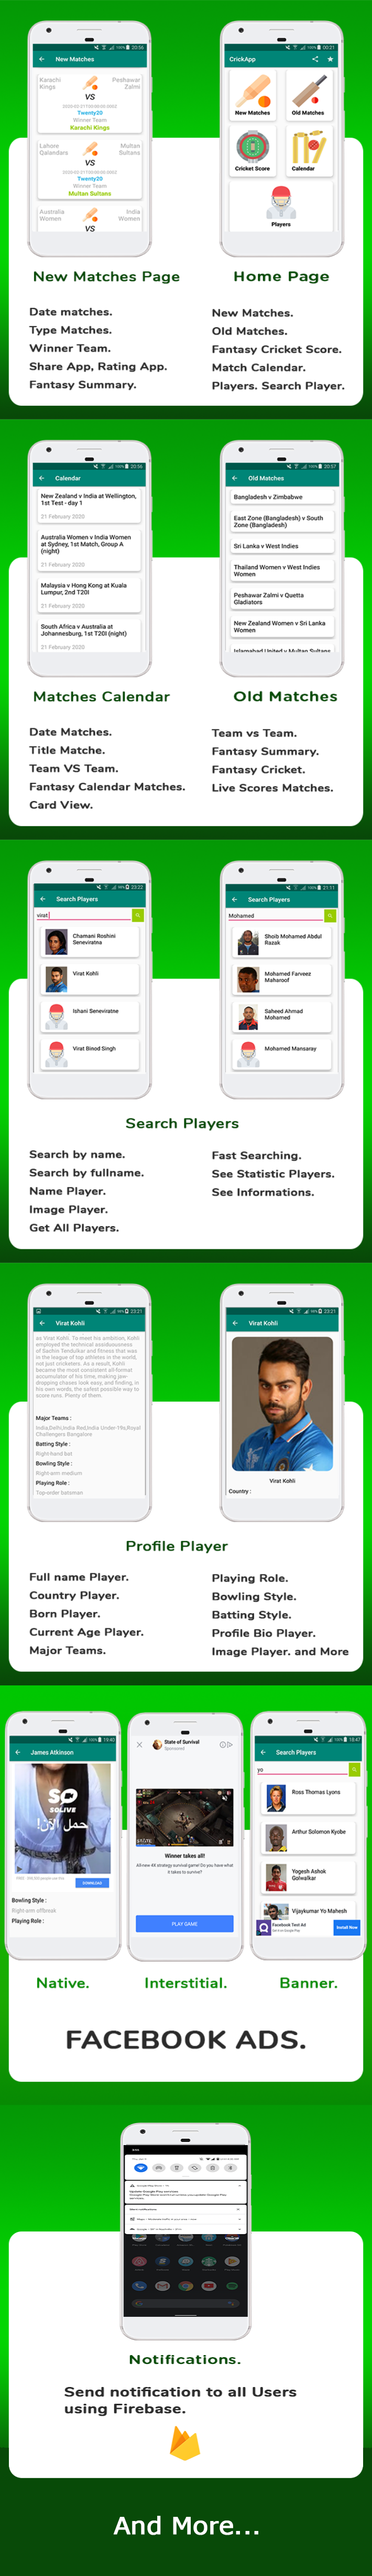 CrickApp Live Cricket Score - Fantasy Cricket & Leagues App - Player Statistics - Match Calendar - 2